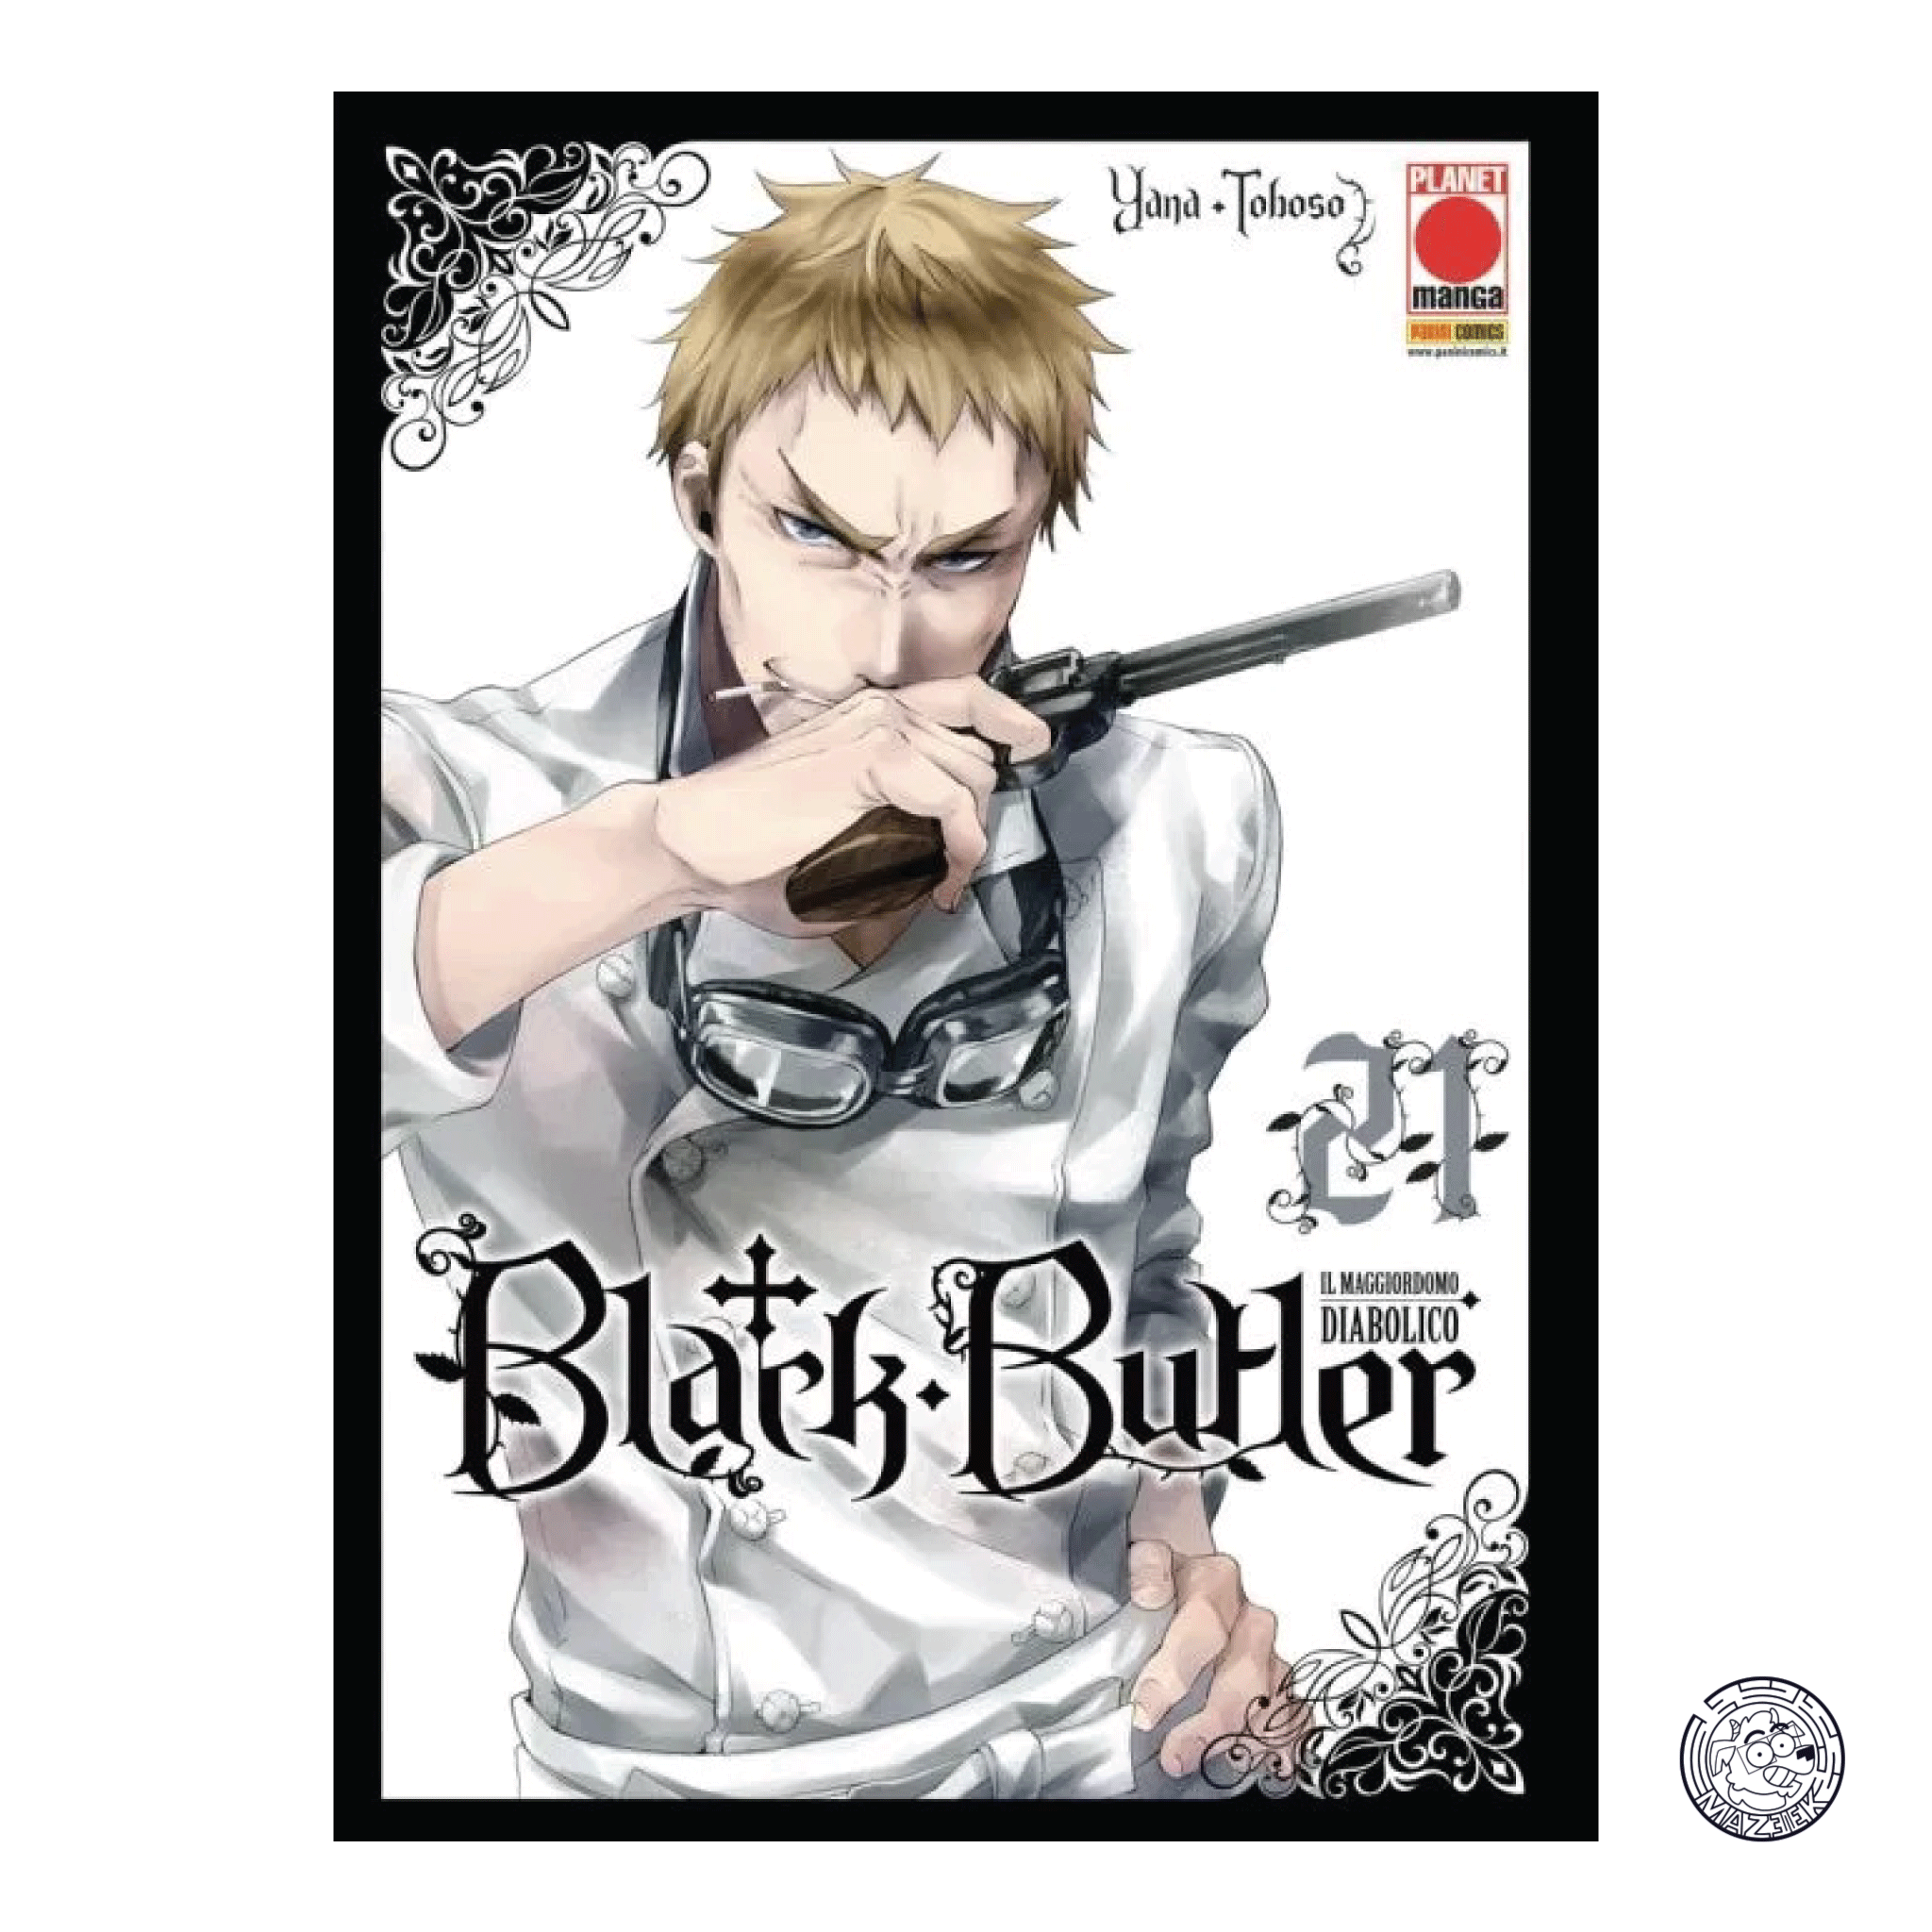 Black Butler - the Evil Butler 21 - Reprint 1